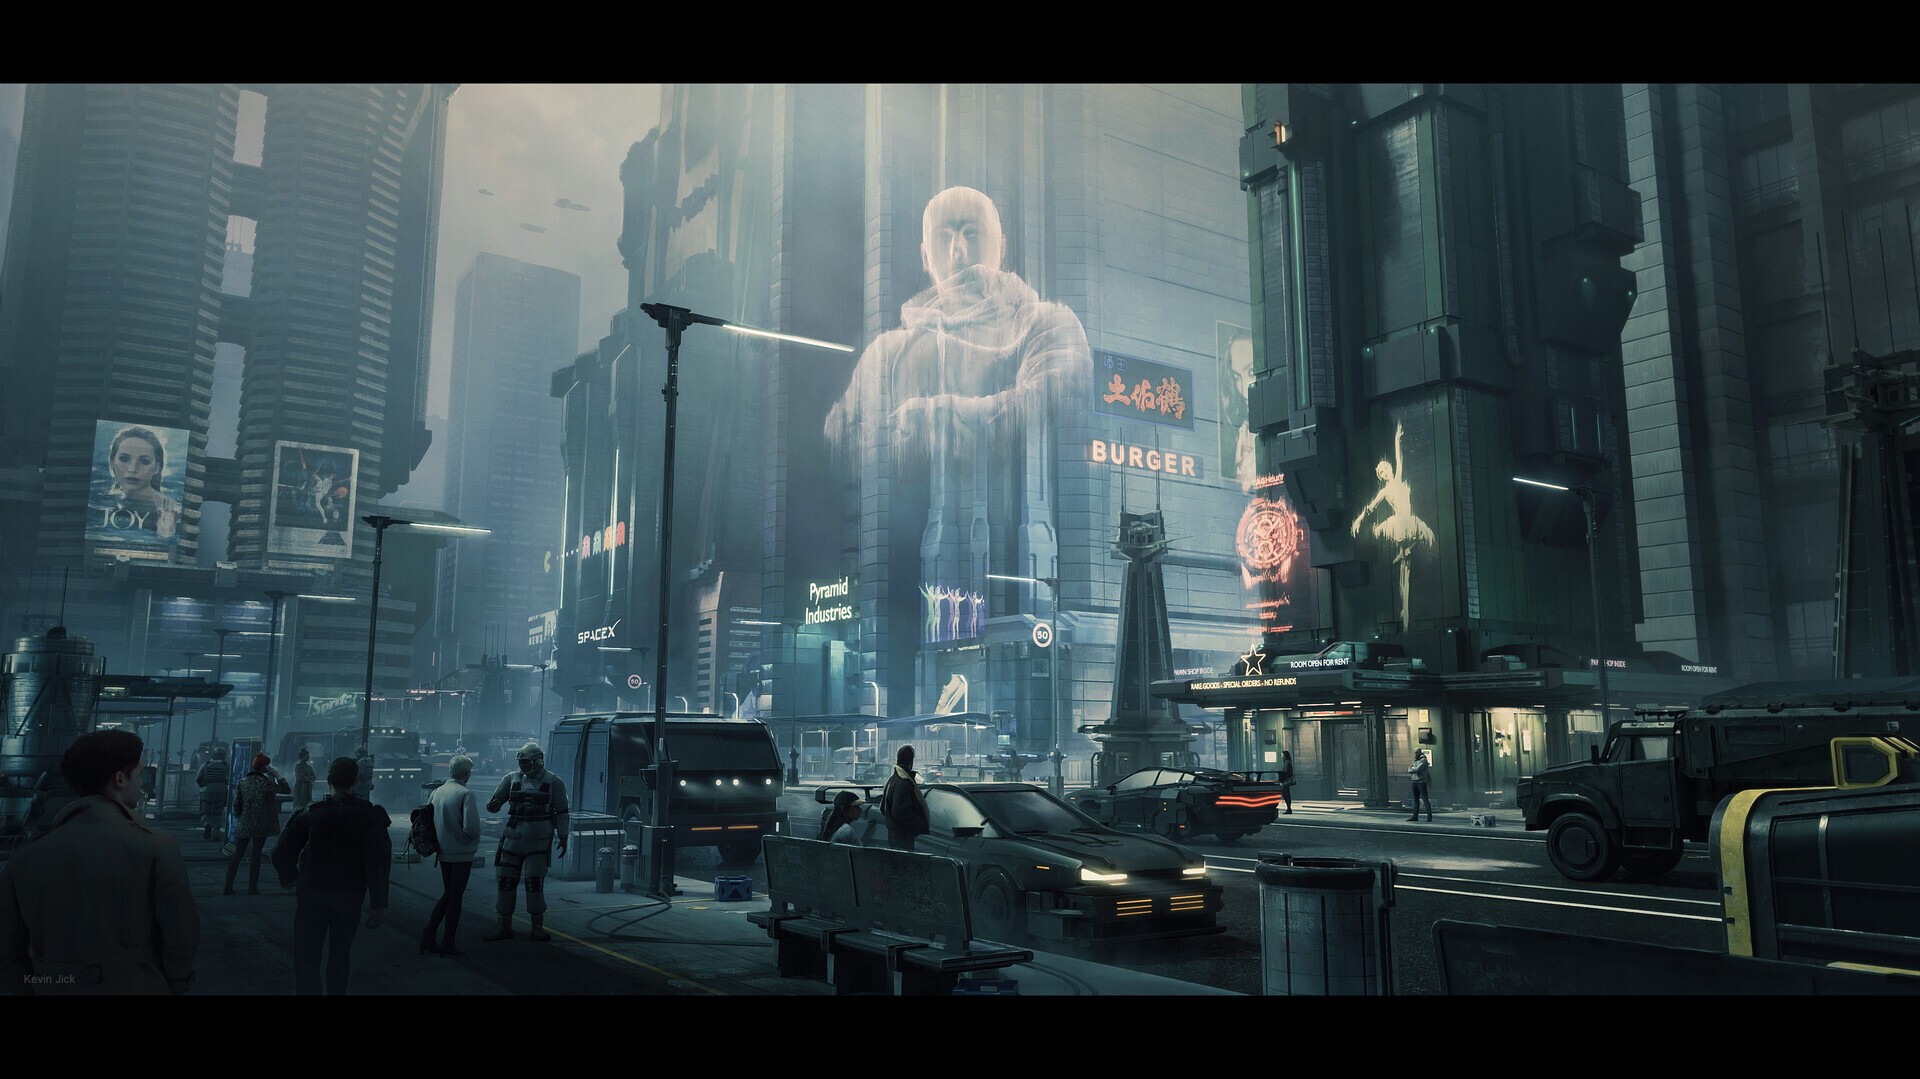 ArtStation - Futuristic cyberpunk tech city street